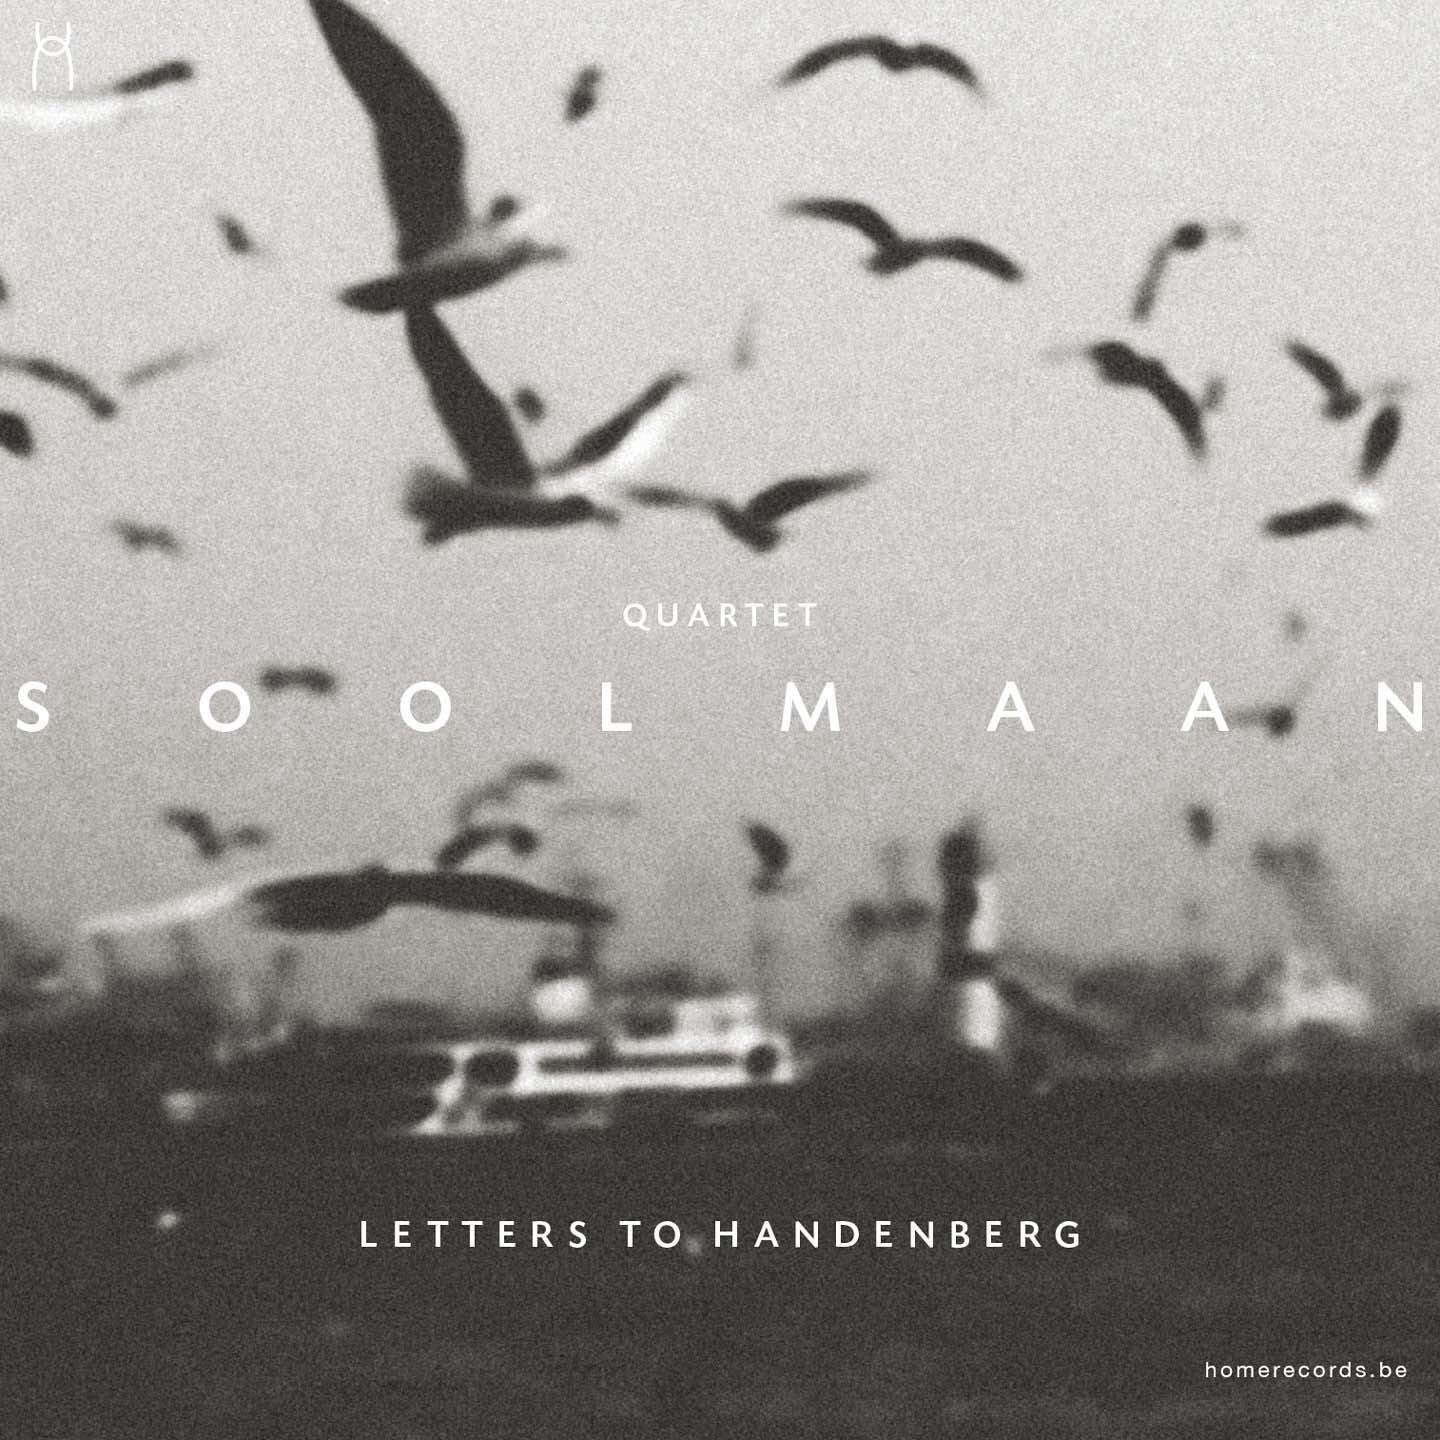 Pochette de : LETTERS TO HANDENBERG - SOOLMAAN QUARTET (CD)